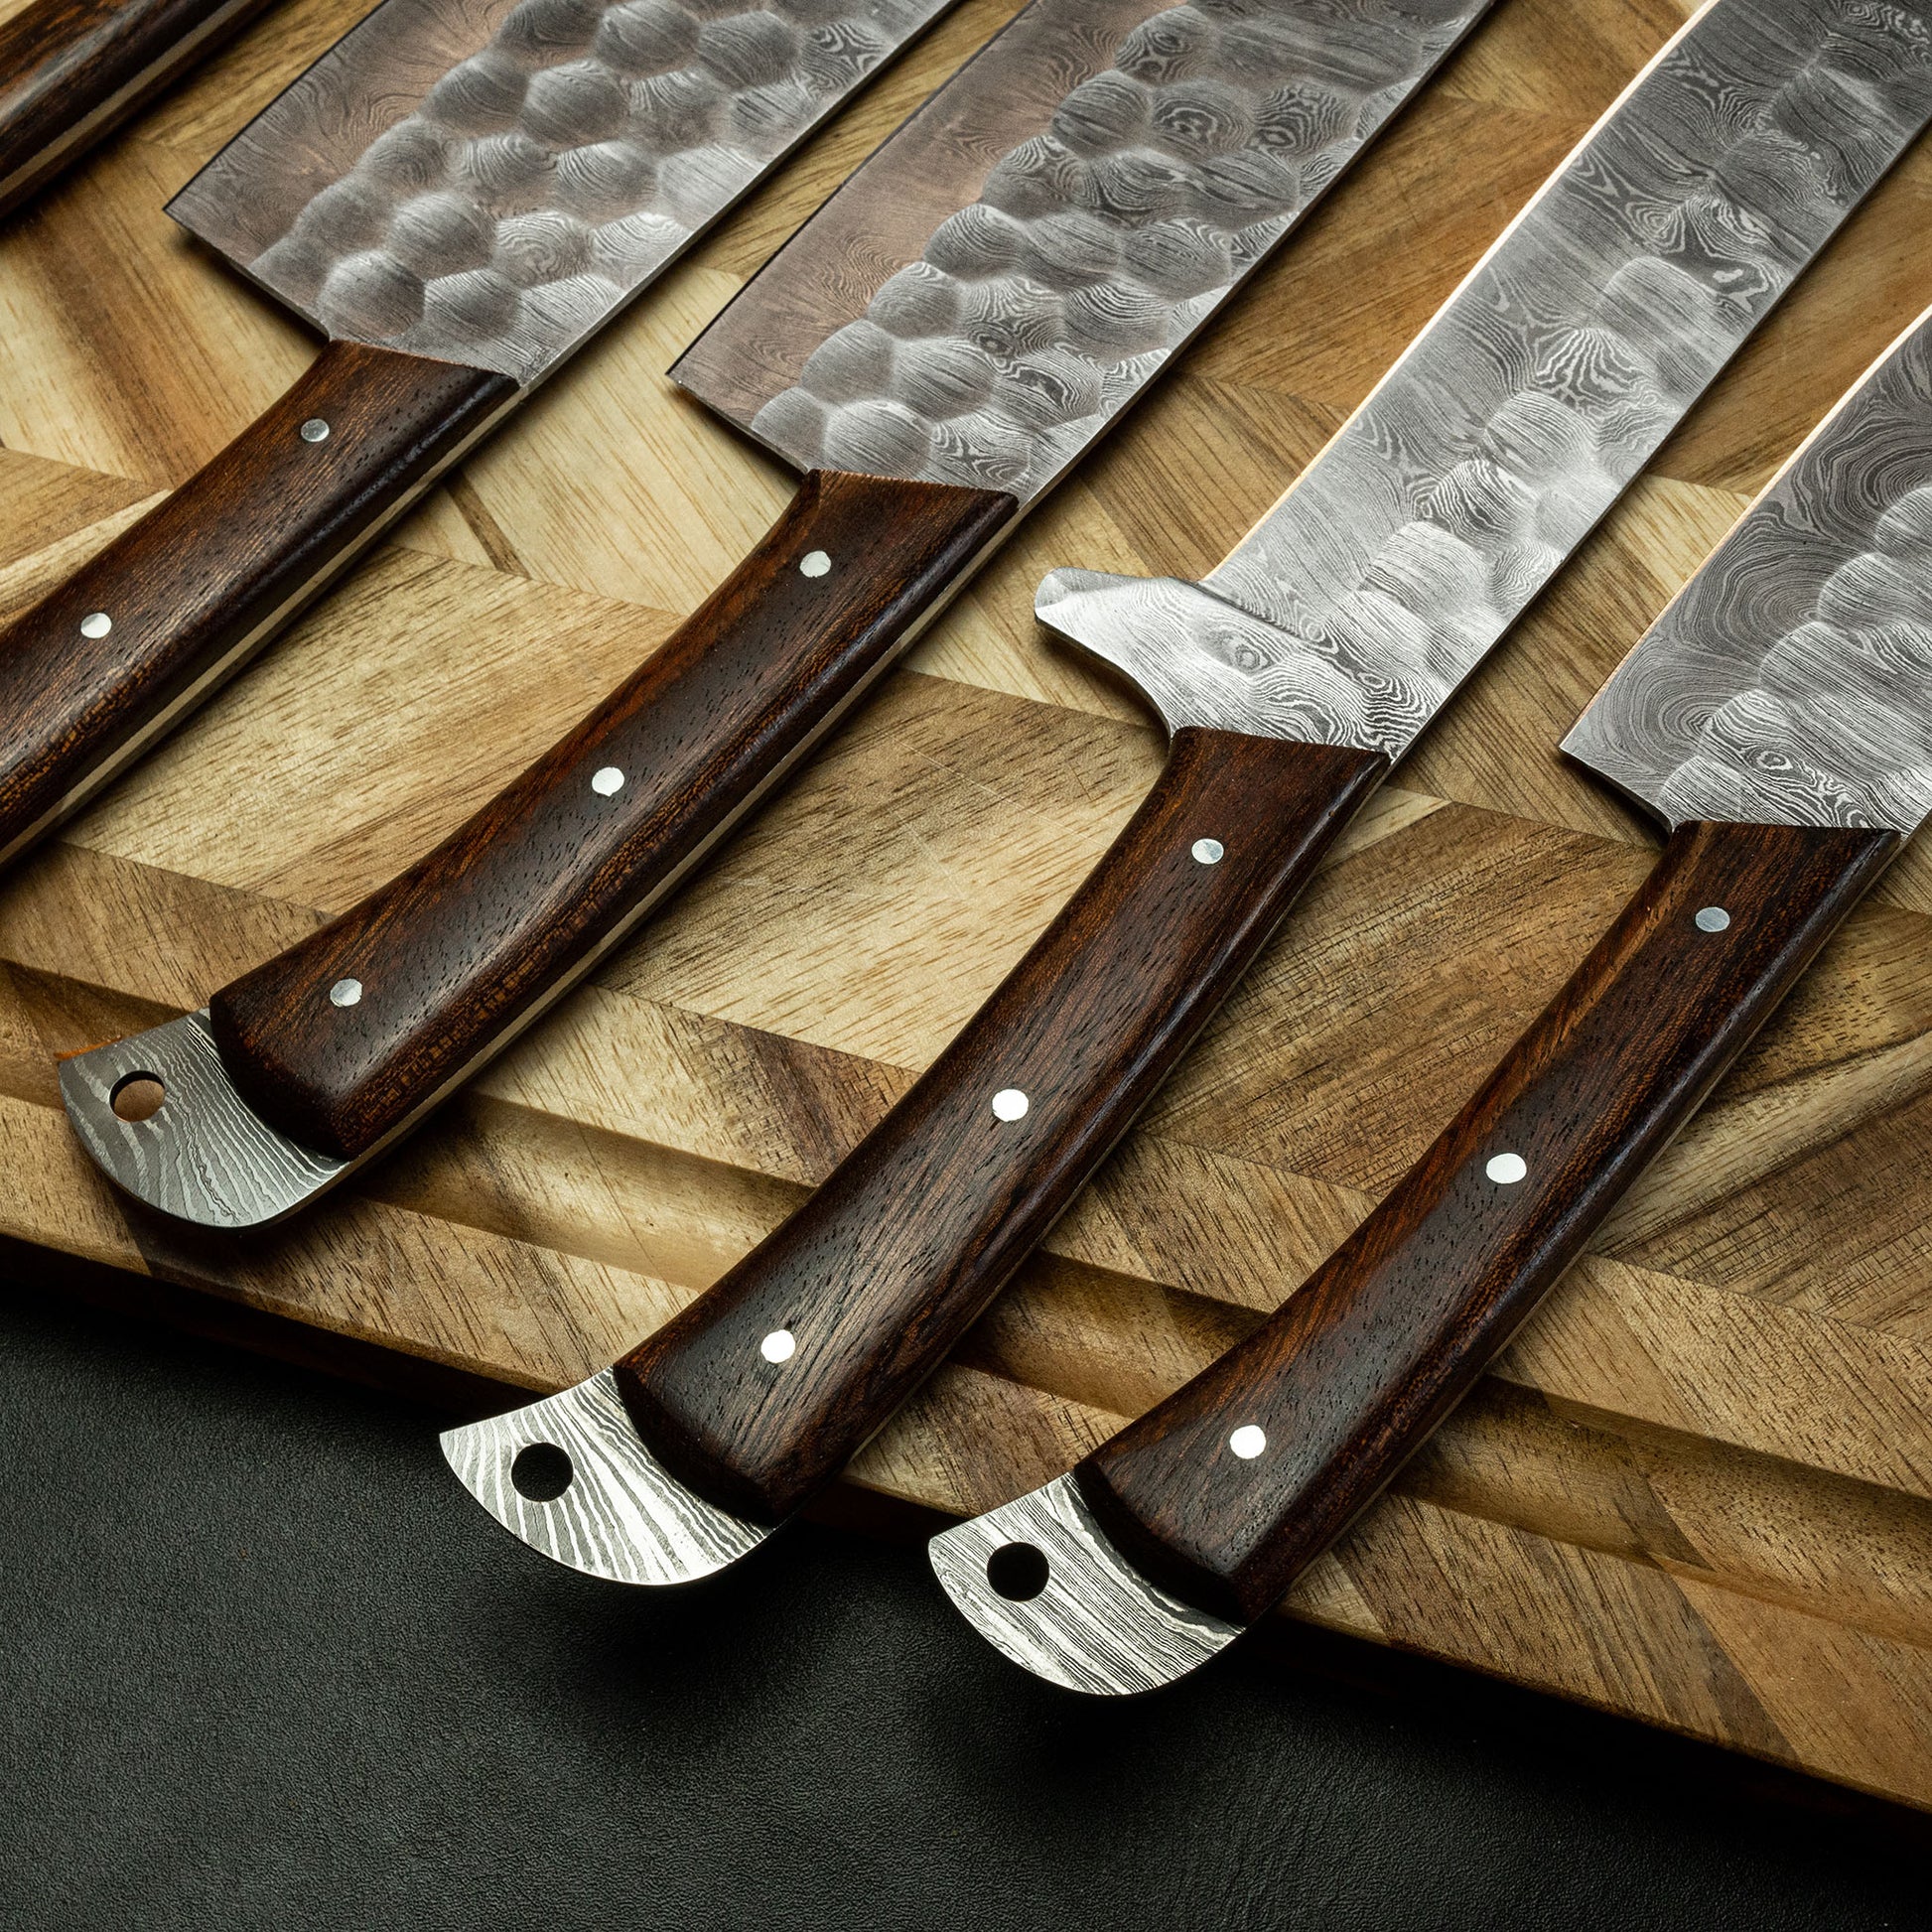 Damascus Steel Kitchen Knife Set, Stainless Steel Kitchen Knives